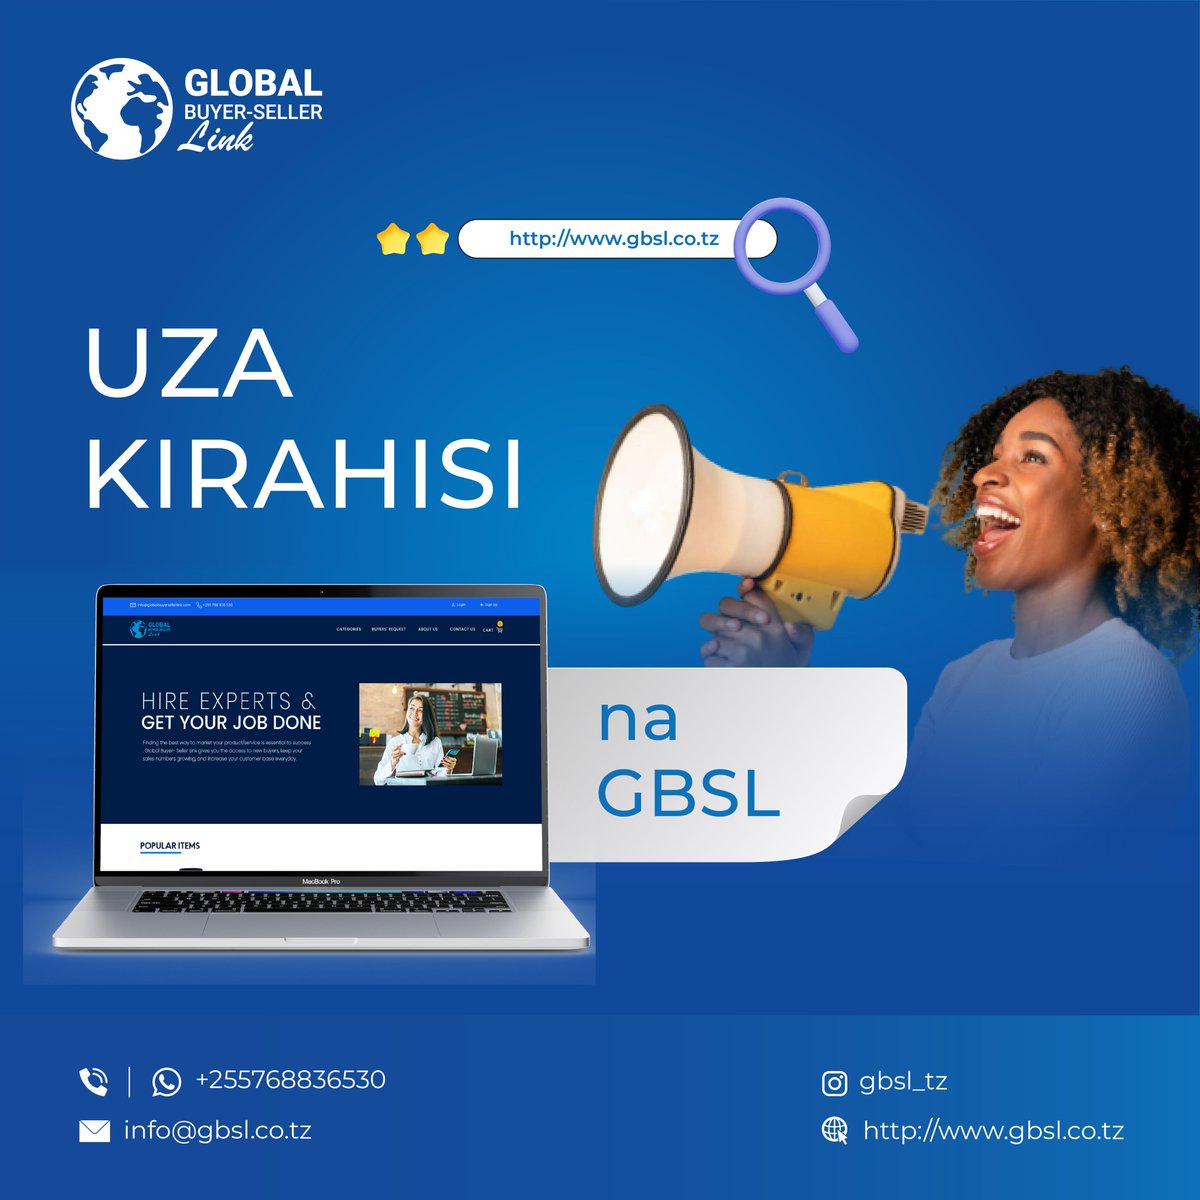 Uza bidhaa zako kirahisi na GBSL leo, uweze kutengeneza faida maradufu.

Wasiliana nasi sasa kwa namba +255768836530.

#GlobalBuyerSellerLink #ConnectingOpportunities #GlobalTradeHub #onlinebusiness